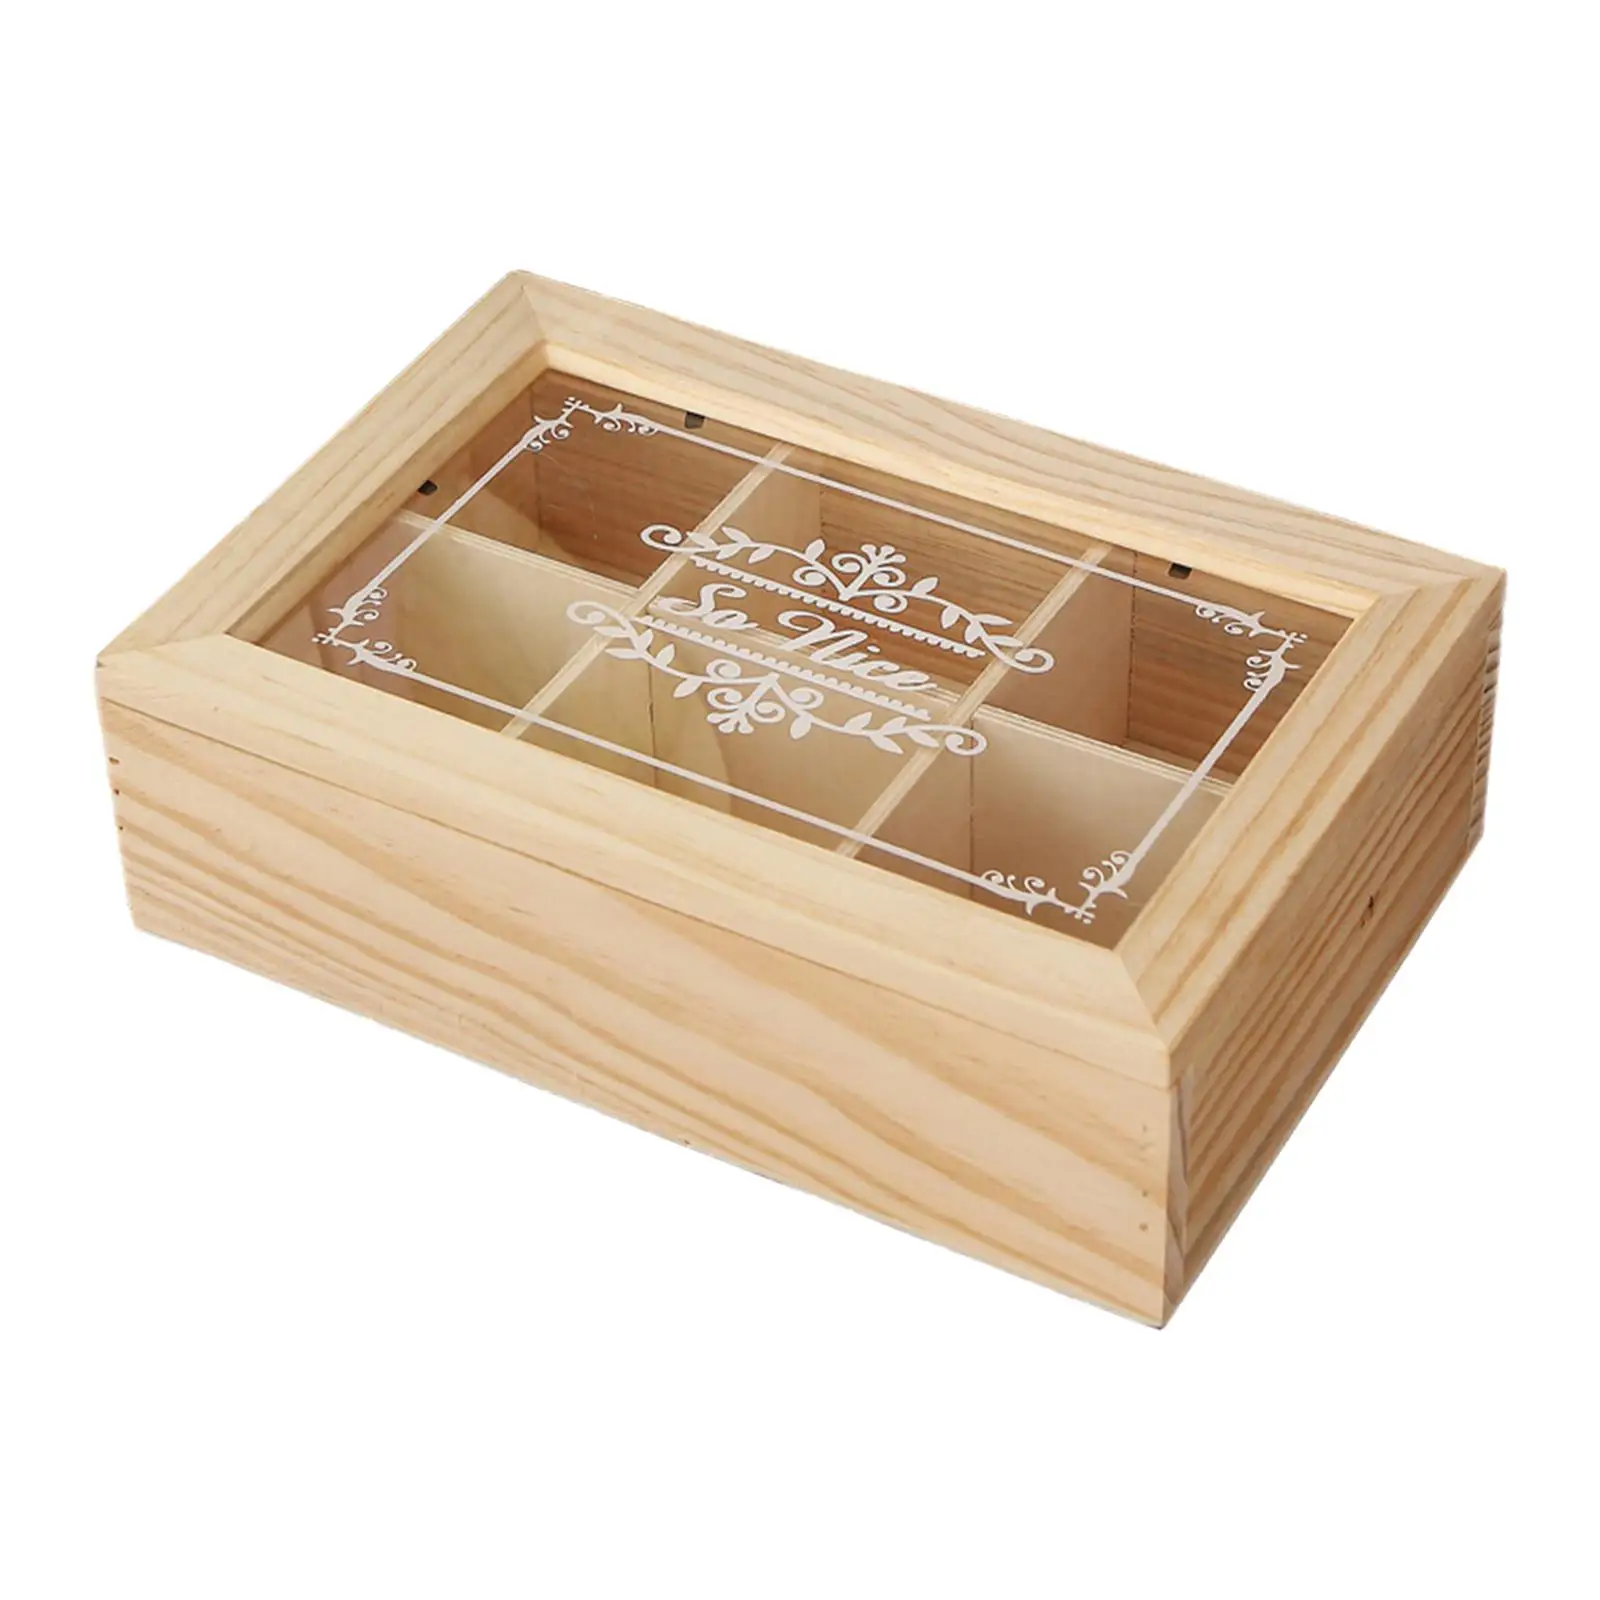 Wooden Tea Box 6 Grids Multifunctional Tea Storage Box with Lid Tea Bag Holder for Home Cabinet Kitchen Decor Organization